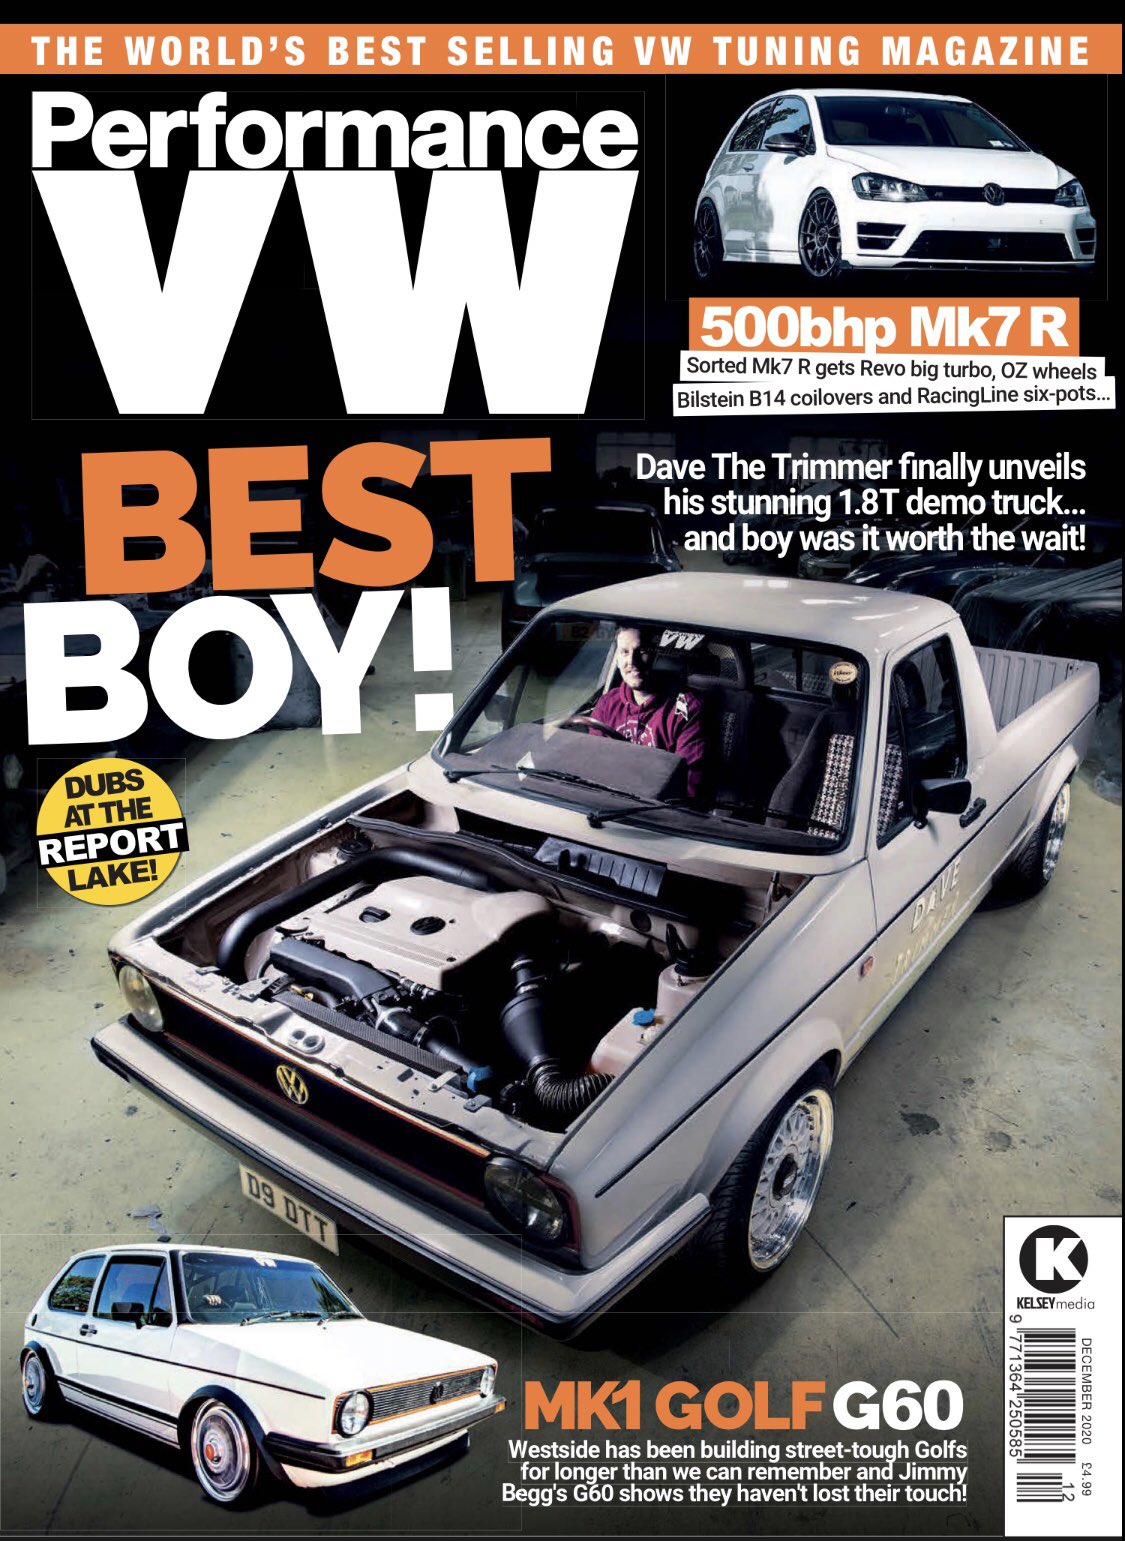 vw-golf-7-bb-12 - VW Tuning Mag